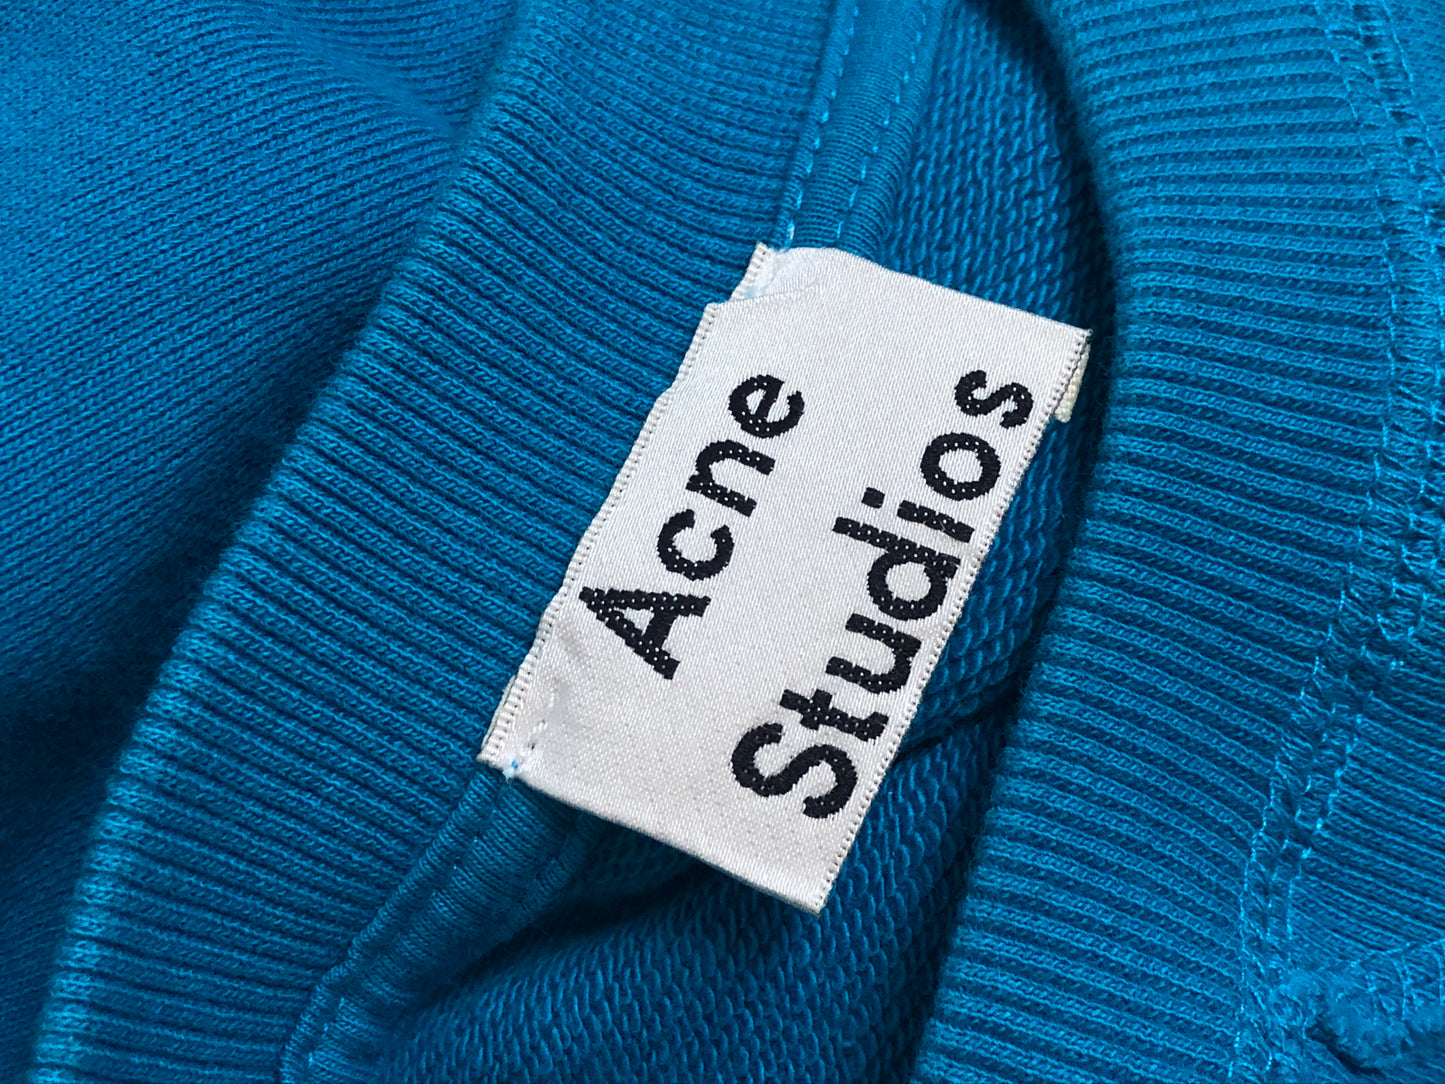 Acne Studios Sweatshirt